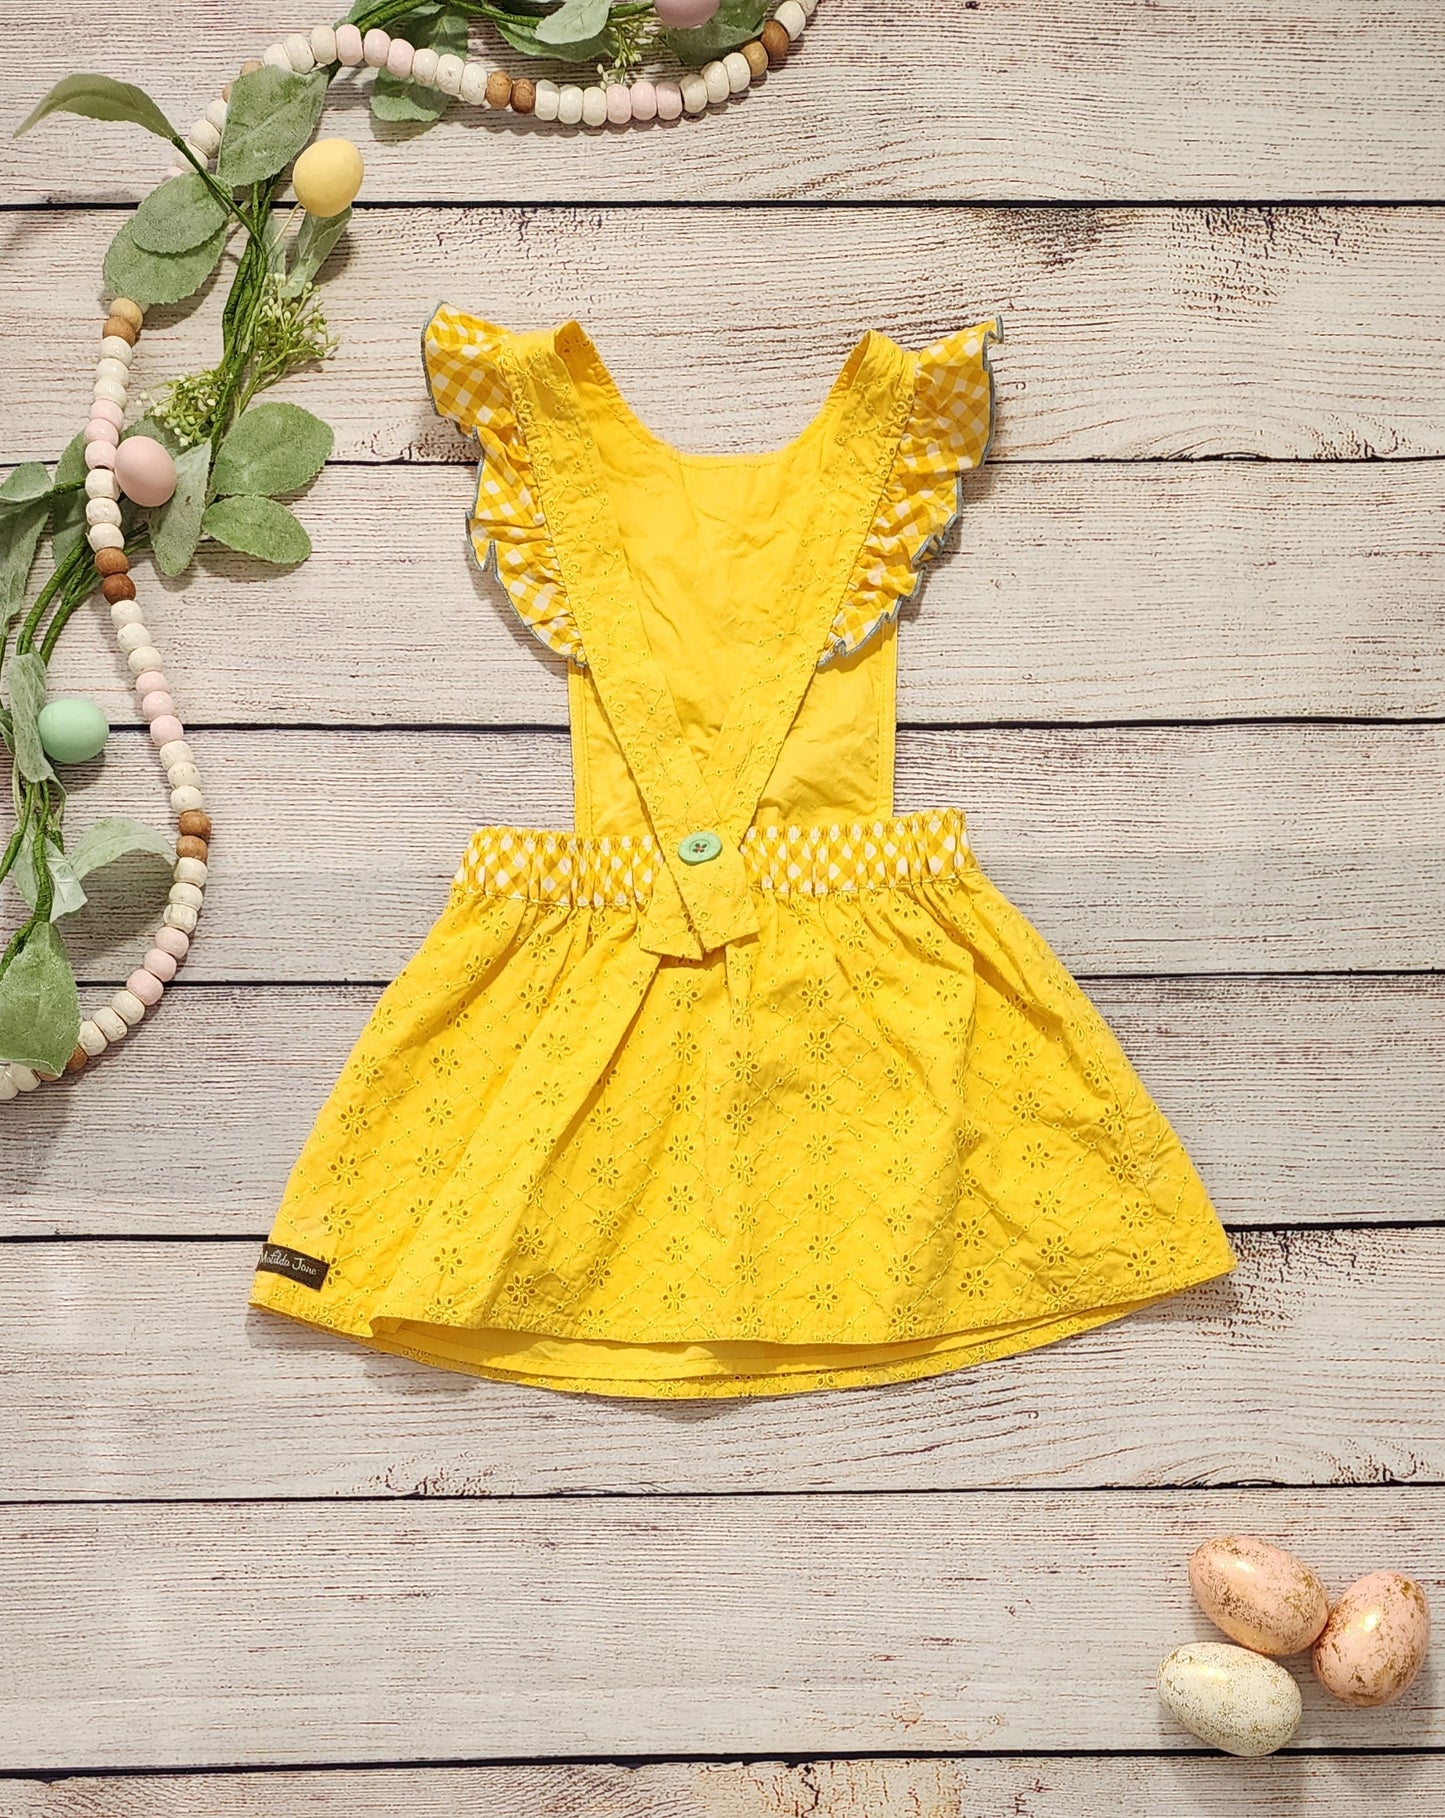 Matilda Jane Splendid Sunshine Pinafore Dress, Size 4